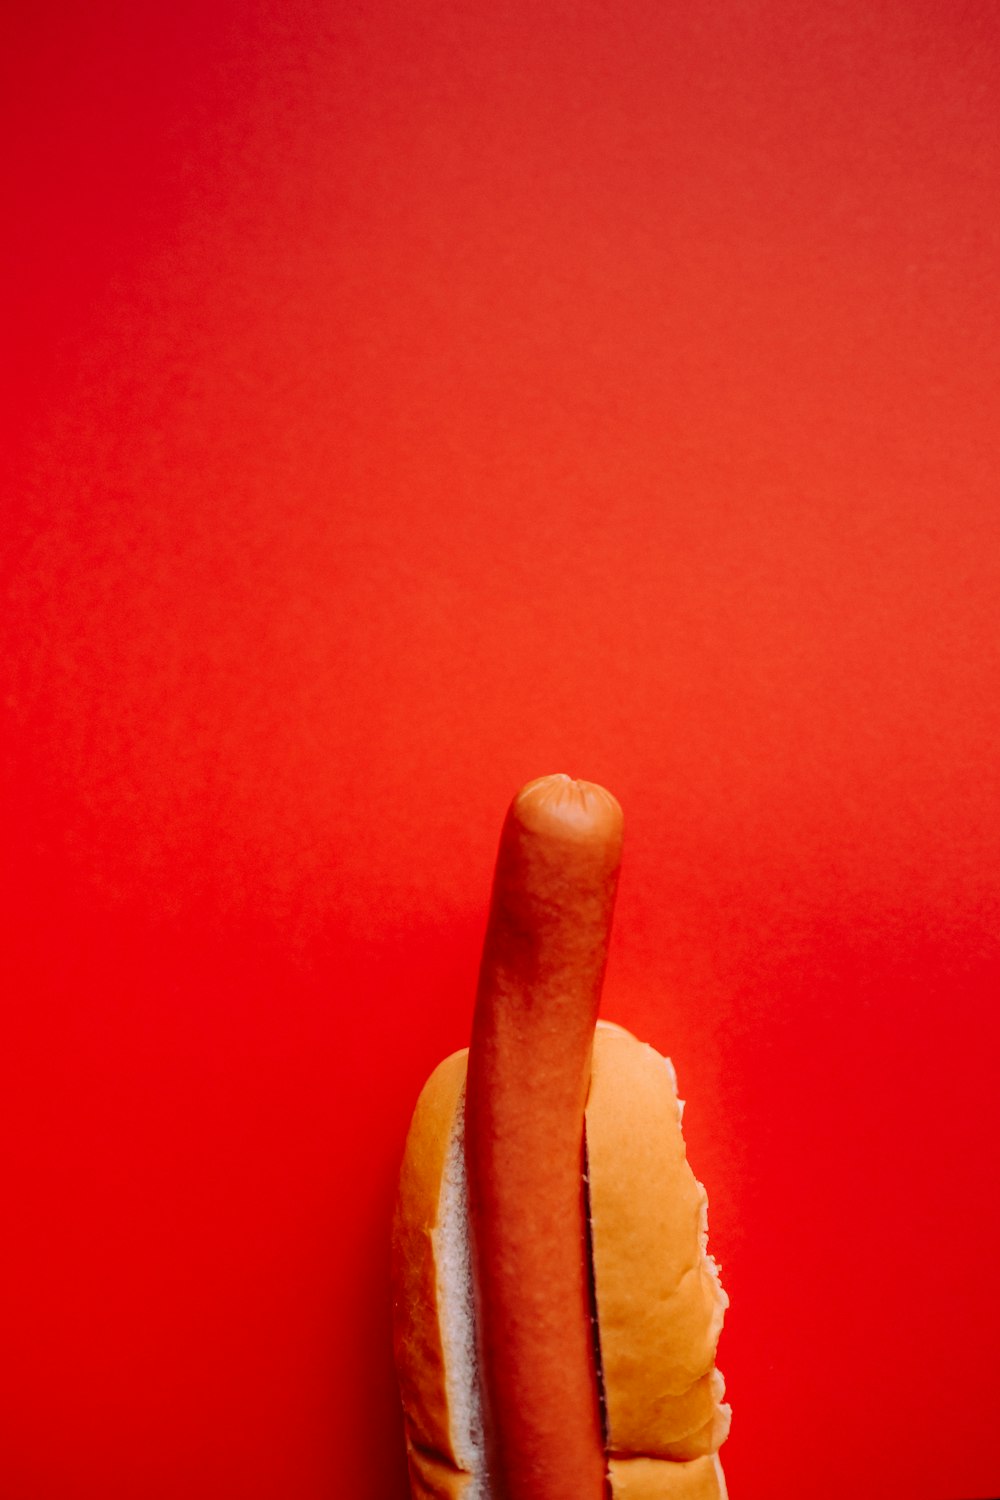 hotdog sandwich on red background